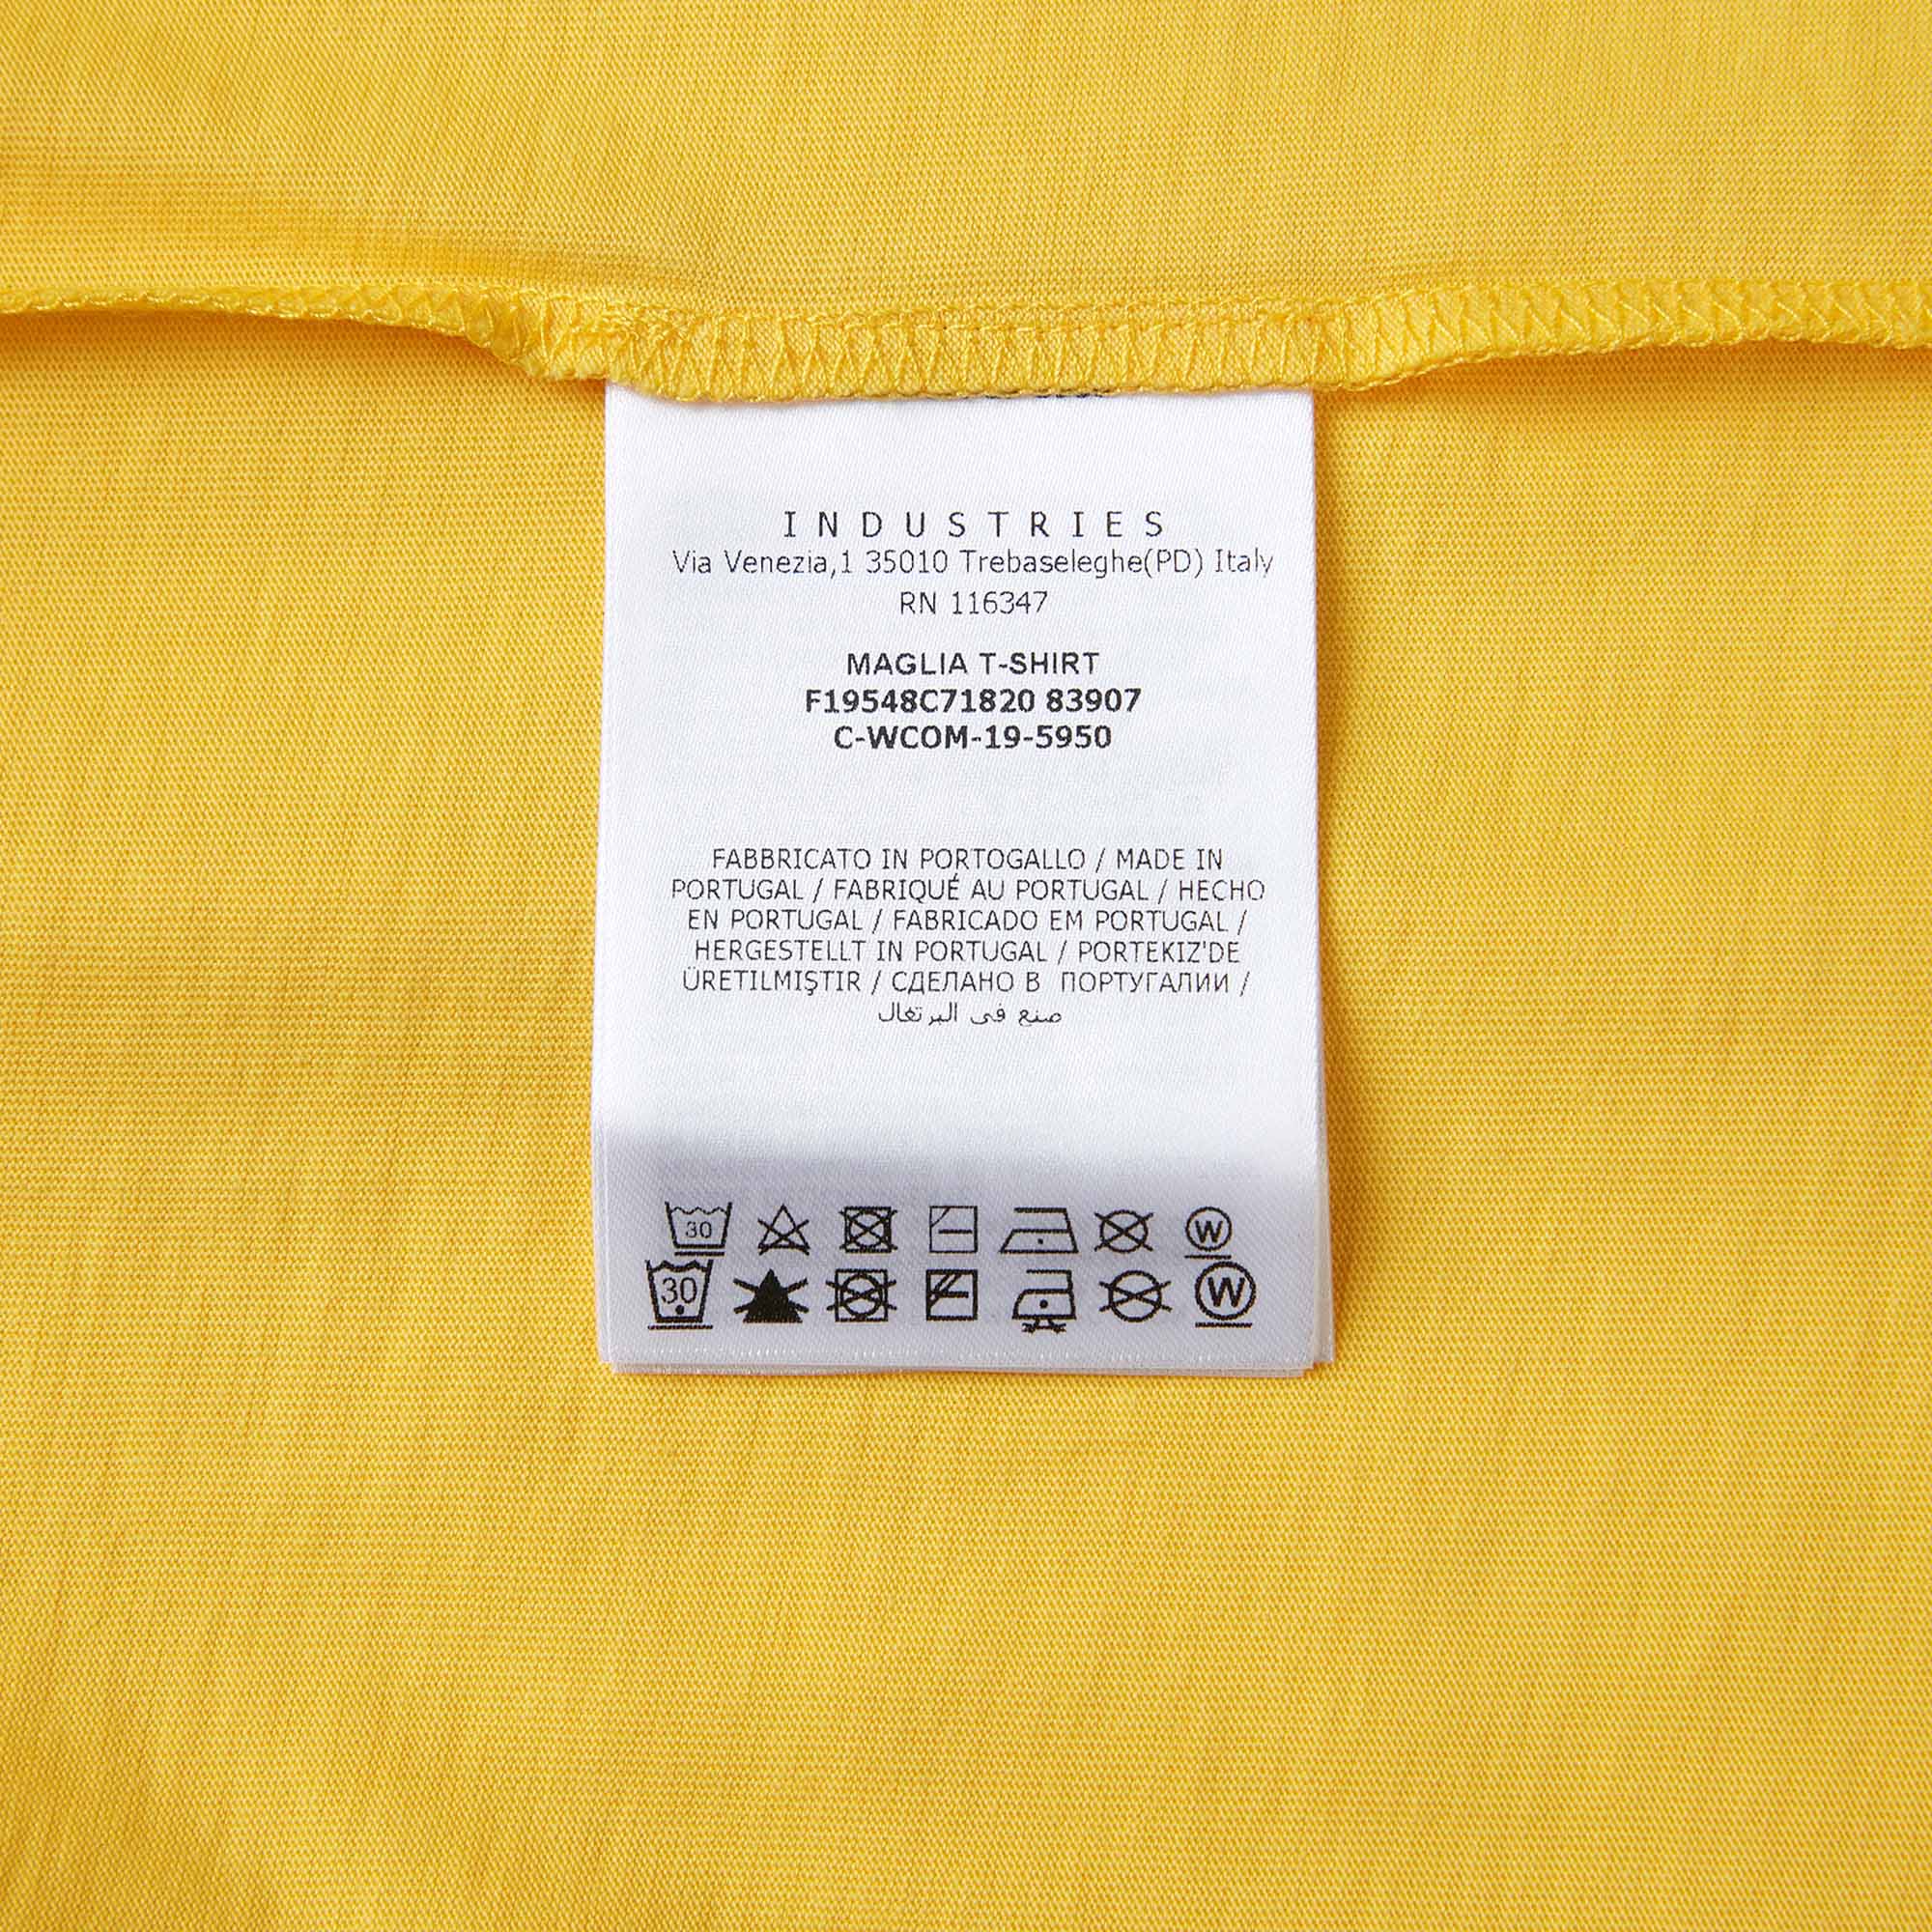 Boys Bright Yellow Cotton T-shirt